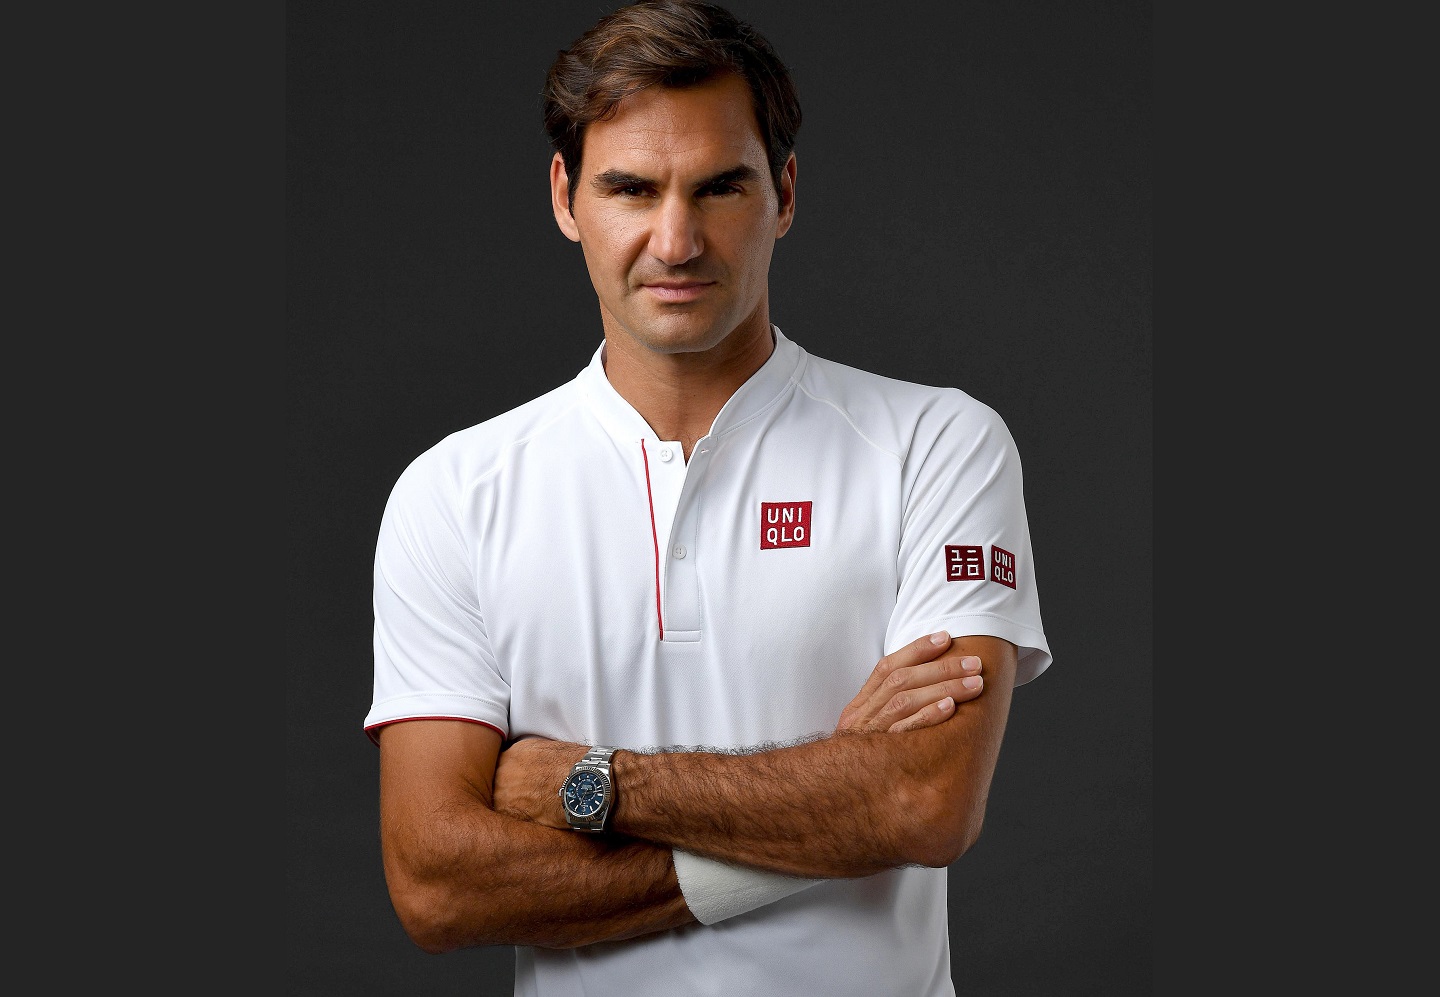 Roger Federer leaves Nike for Uniqlo | Options, The Edge